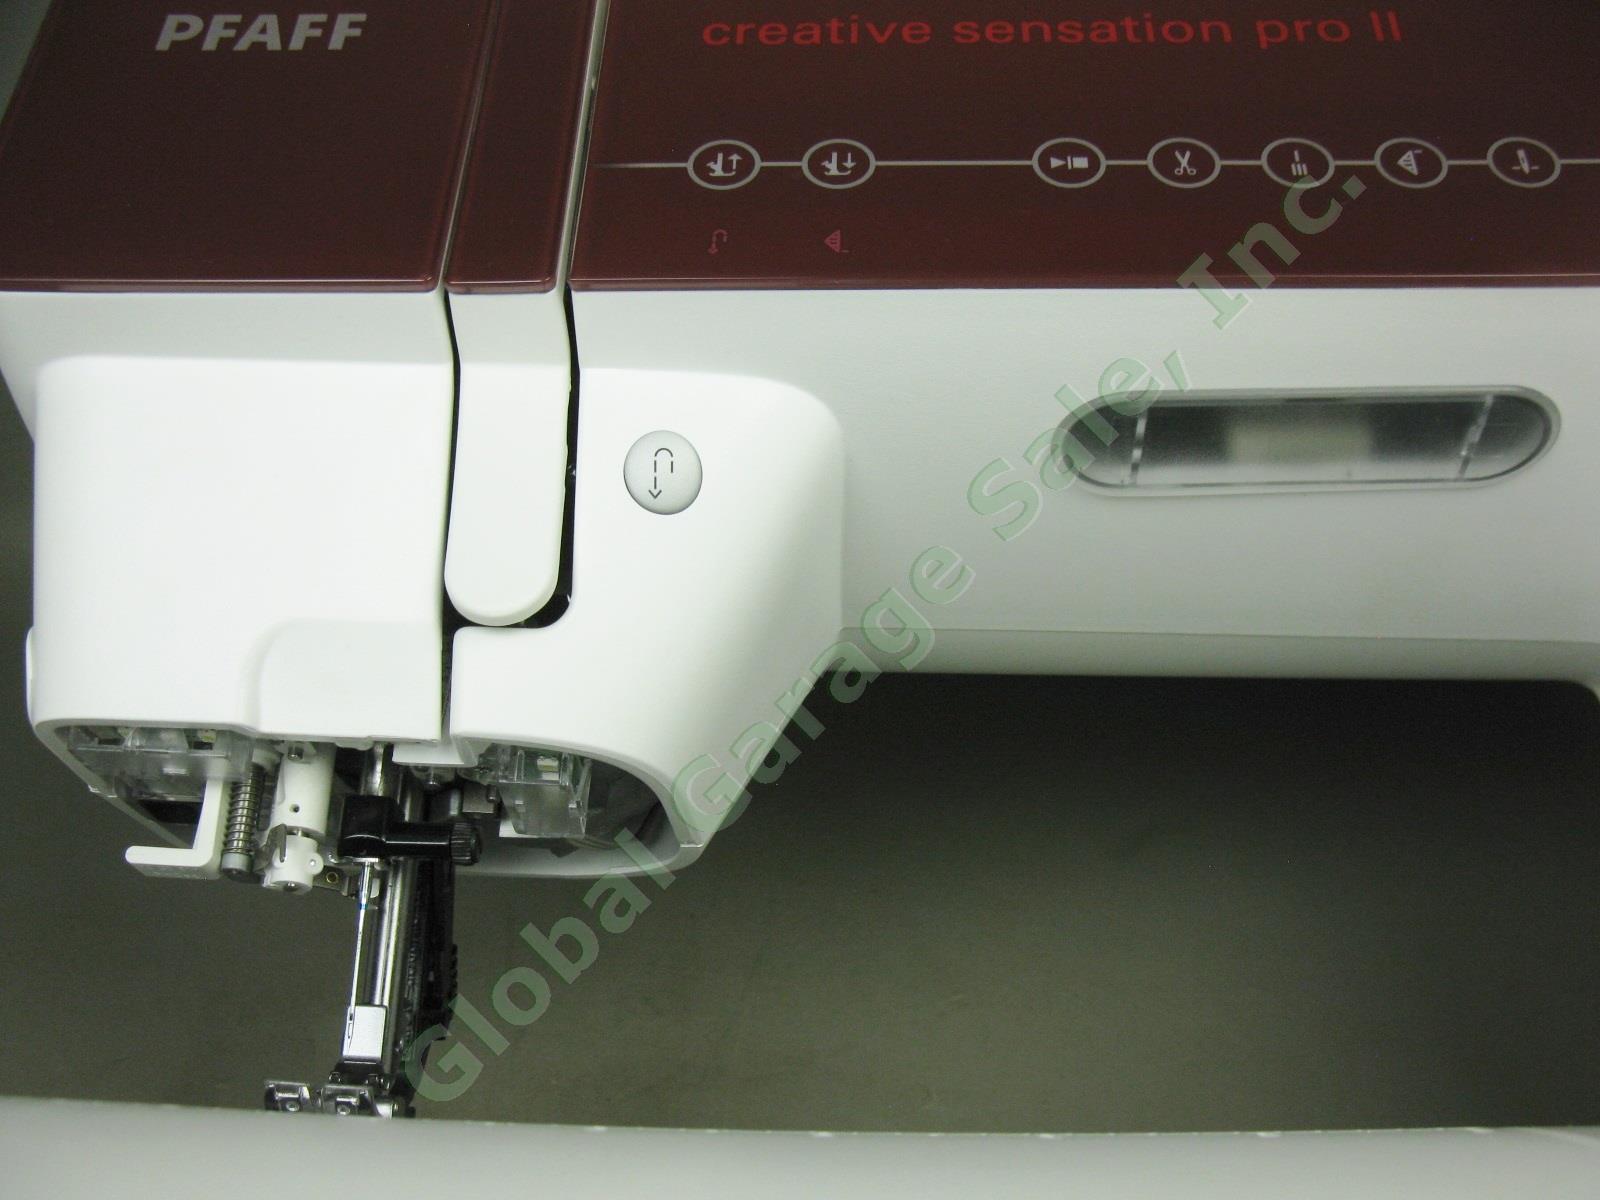 Pfaff Creative Sensation Pro II 2 Sewing Machine + Embroidery Unit Just Serviced 15